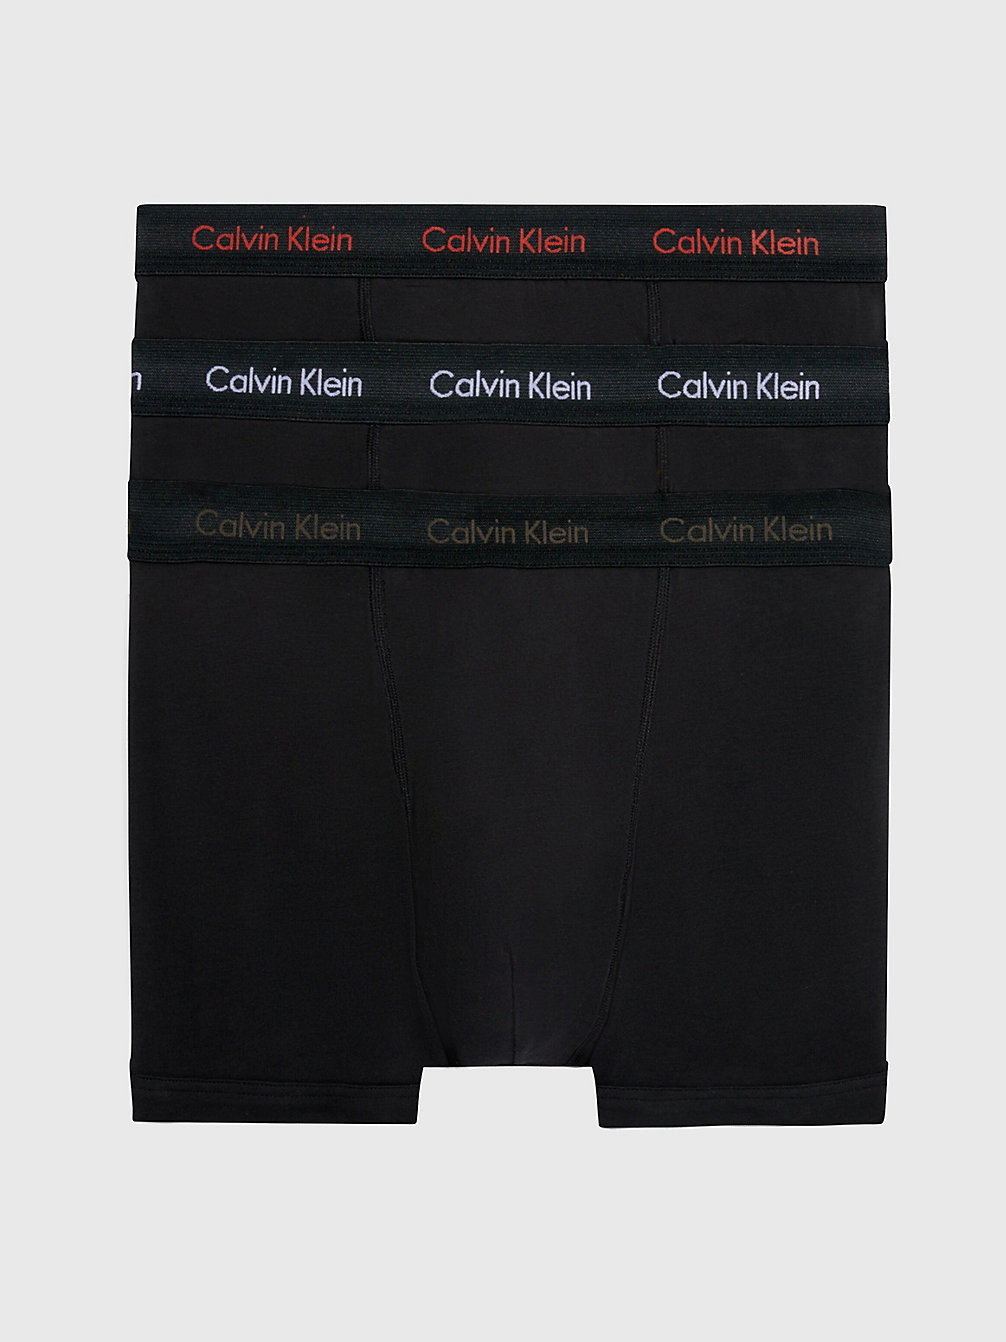 B-COOL MELON, GLXY GRY, BRN BELT LG Lot De 3 Boxers - Cotton Stretch undefined hommes Calvin Klein